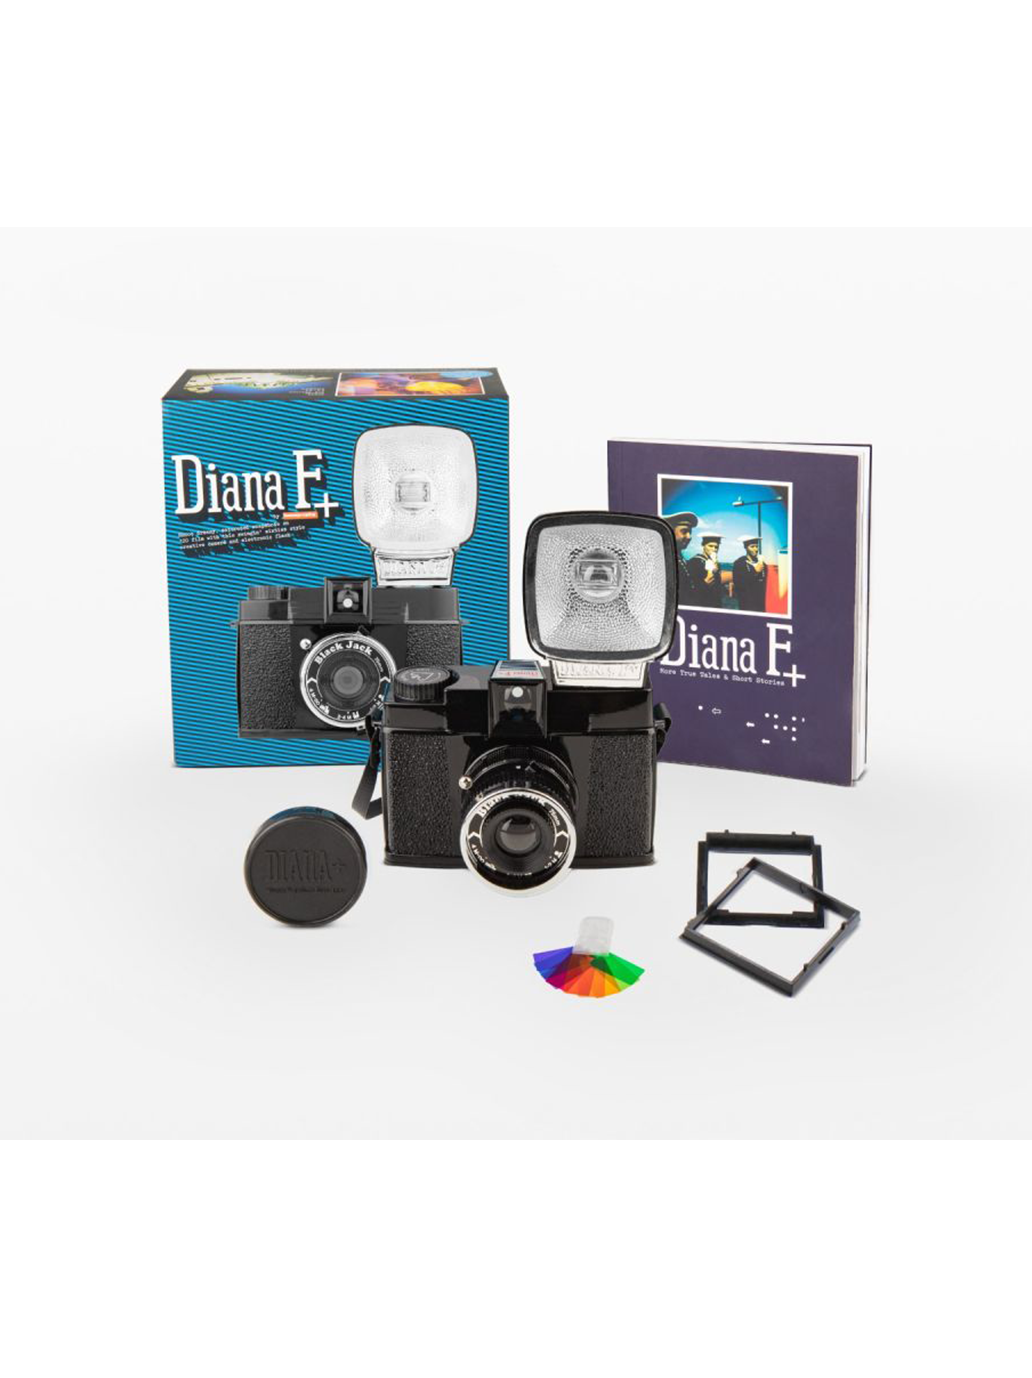 Analoge Kamera mit Diana F+ Kamera und Blitzlampe